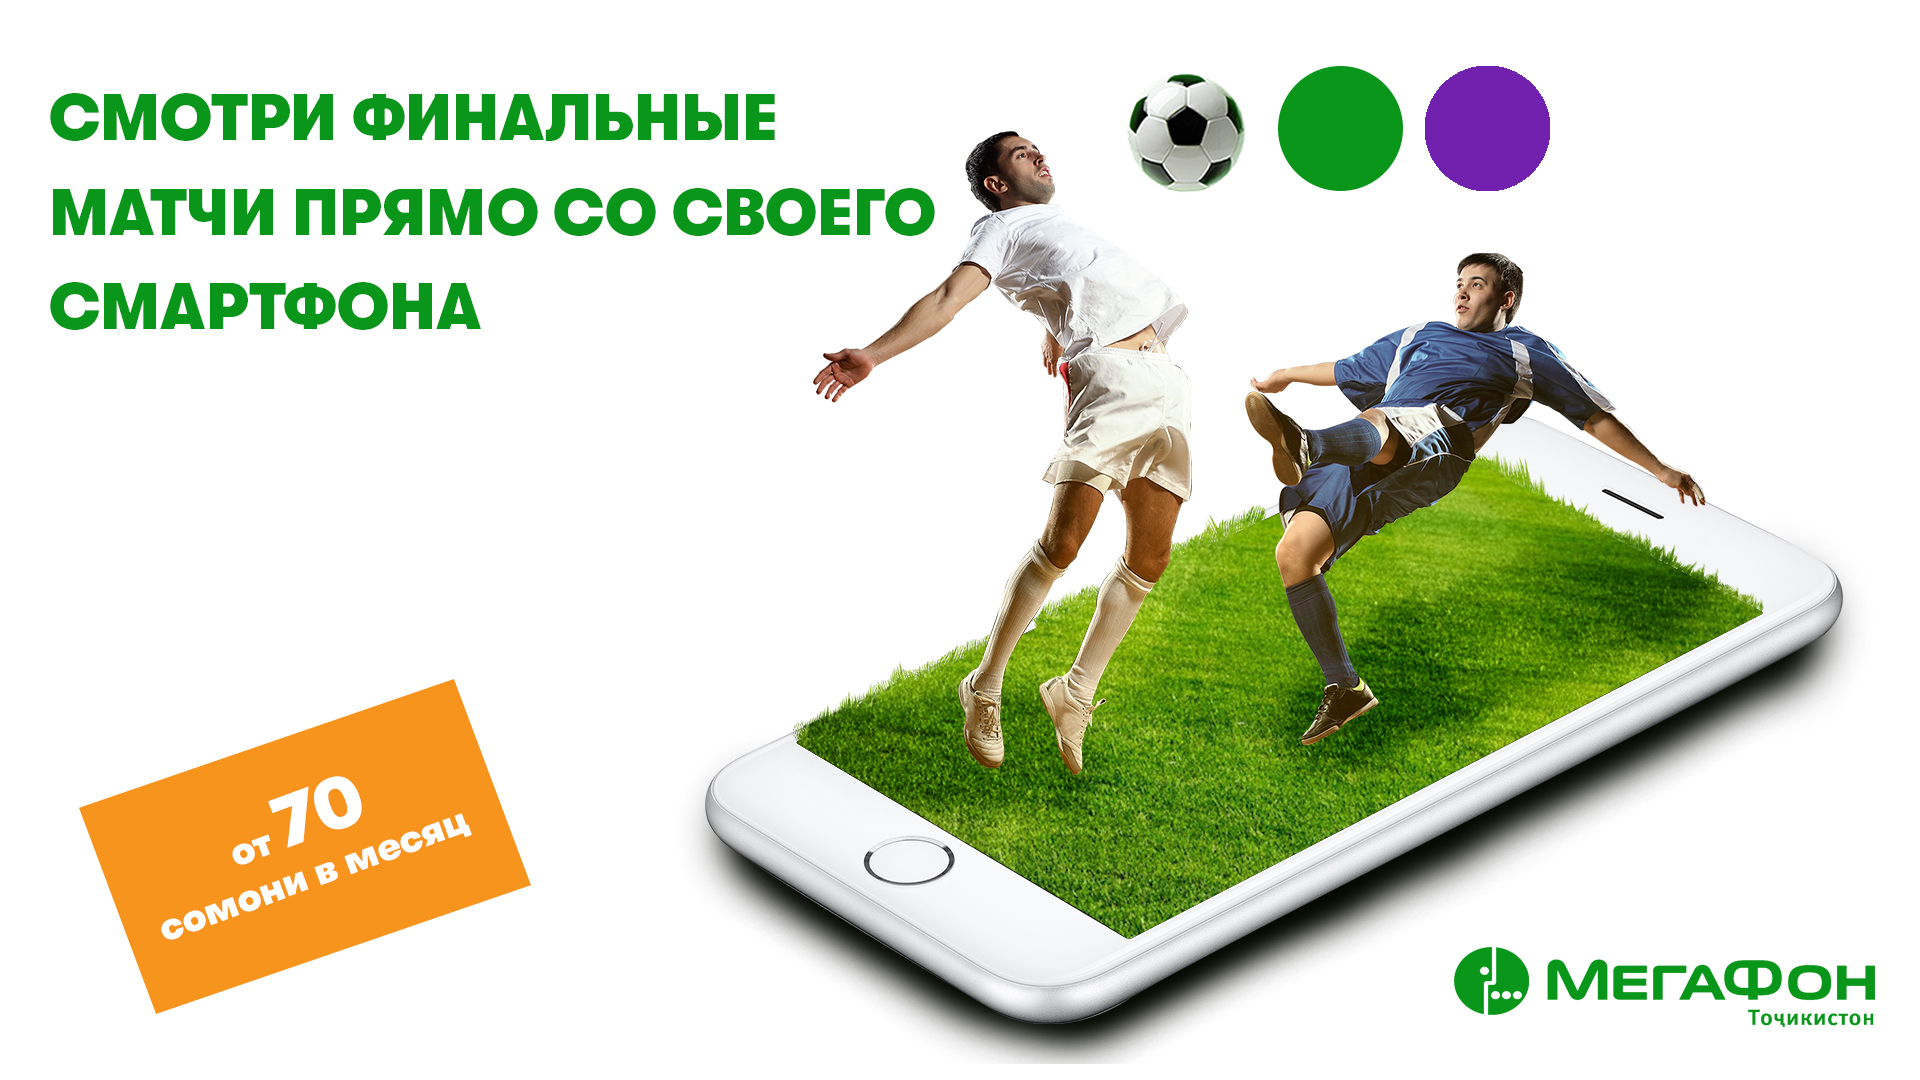 Смотри футбол прямо со своего смартфона.jpg